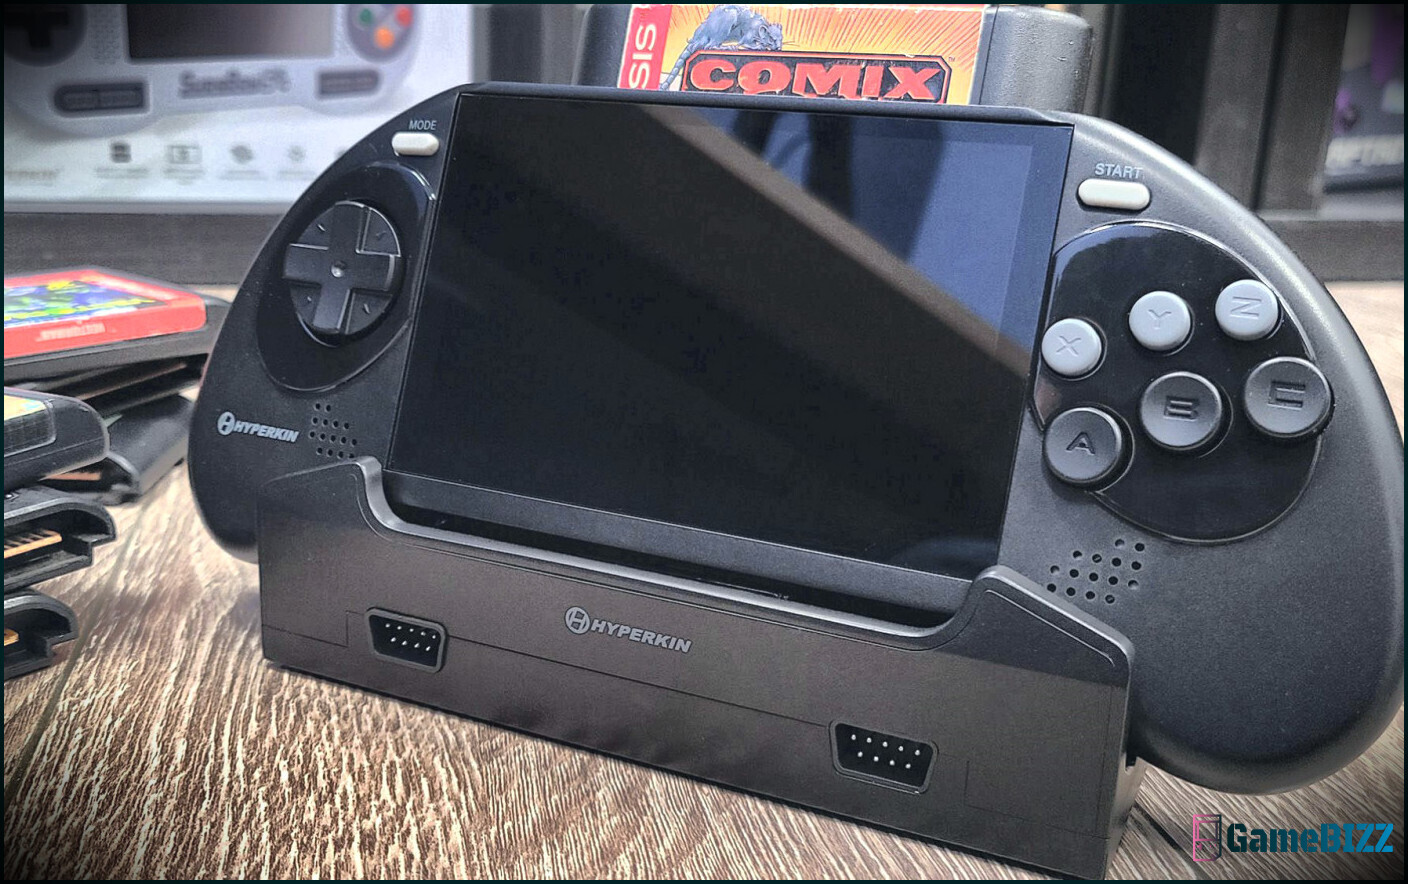 Handheld Sega Genesis kompatibel mit den Original-Kassetten aufgedeckt